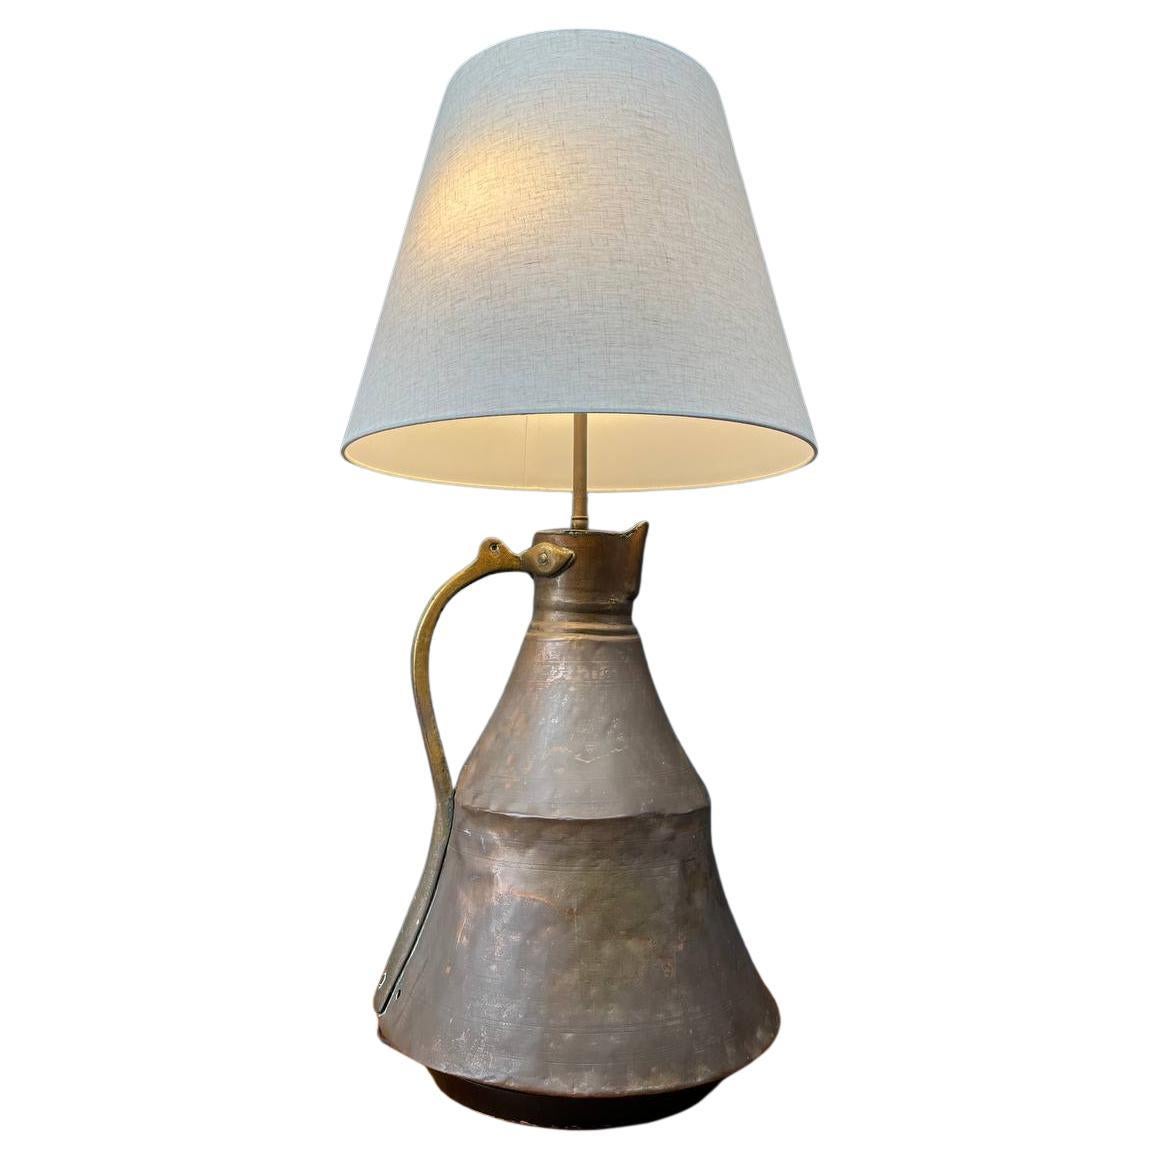 Antique Farmhouse Copper & Brass Pitcher Table Lamp